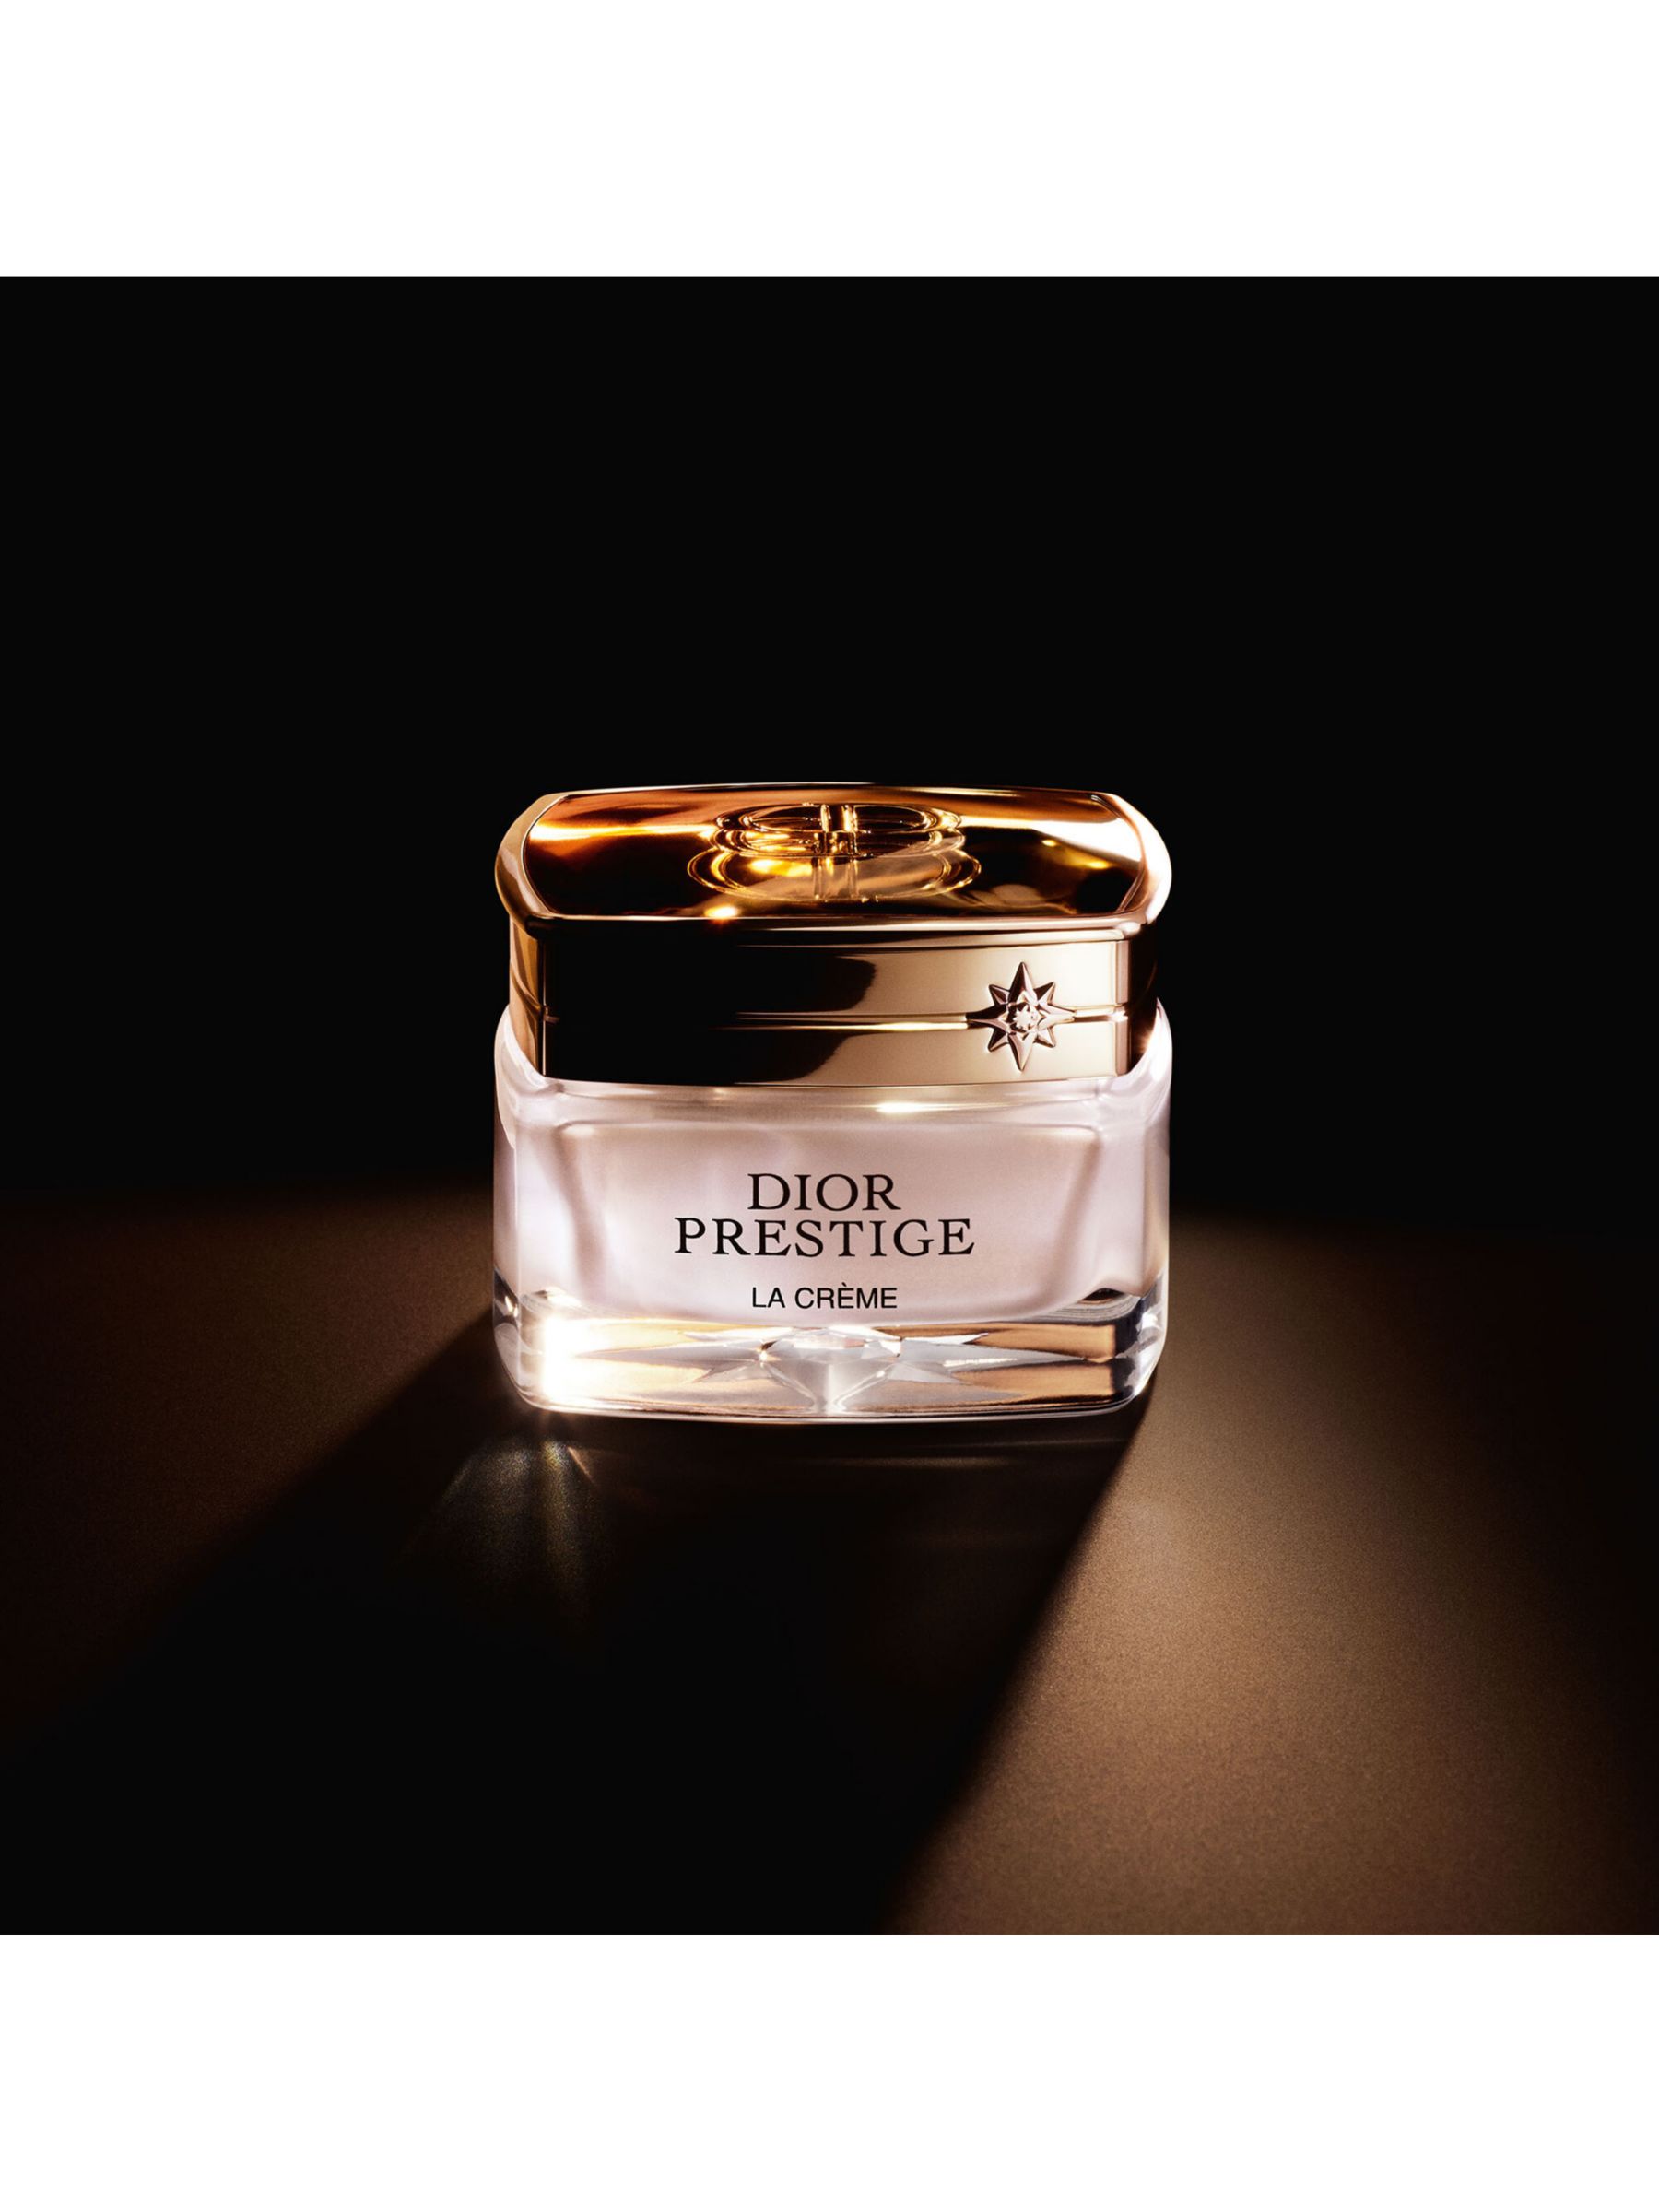 DIOR Prestige La Crème Texture Riche Jar, 50ml 8